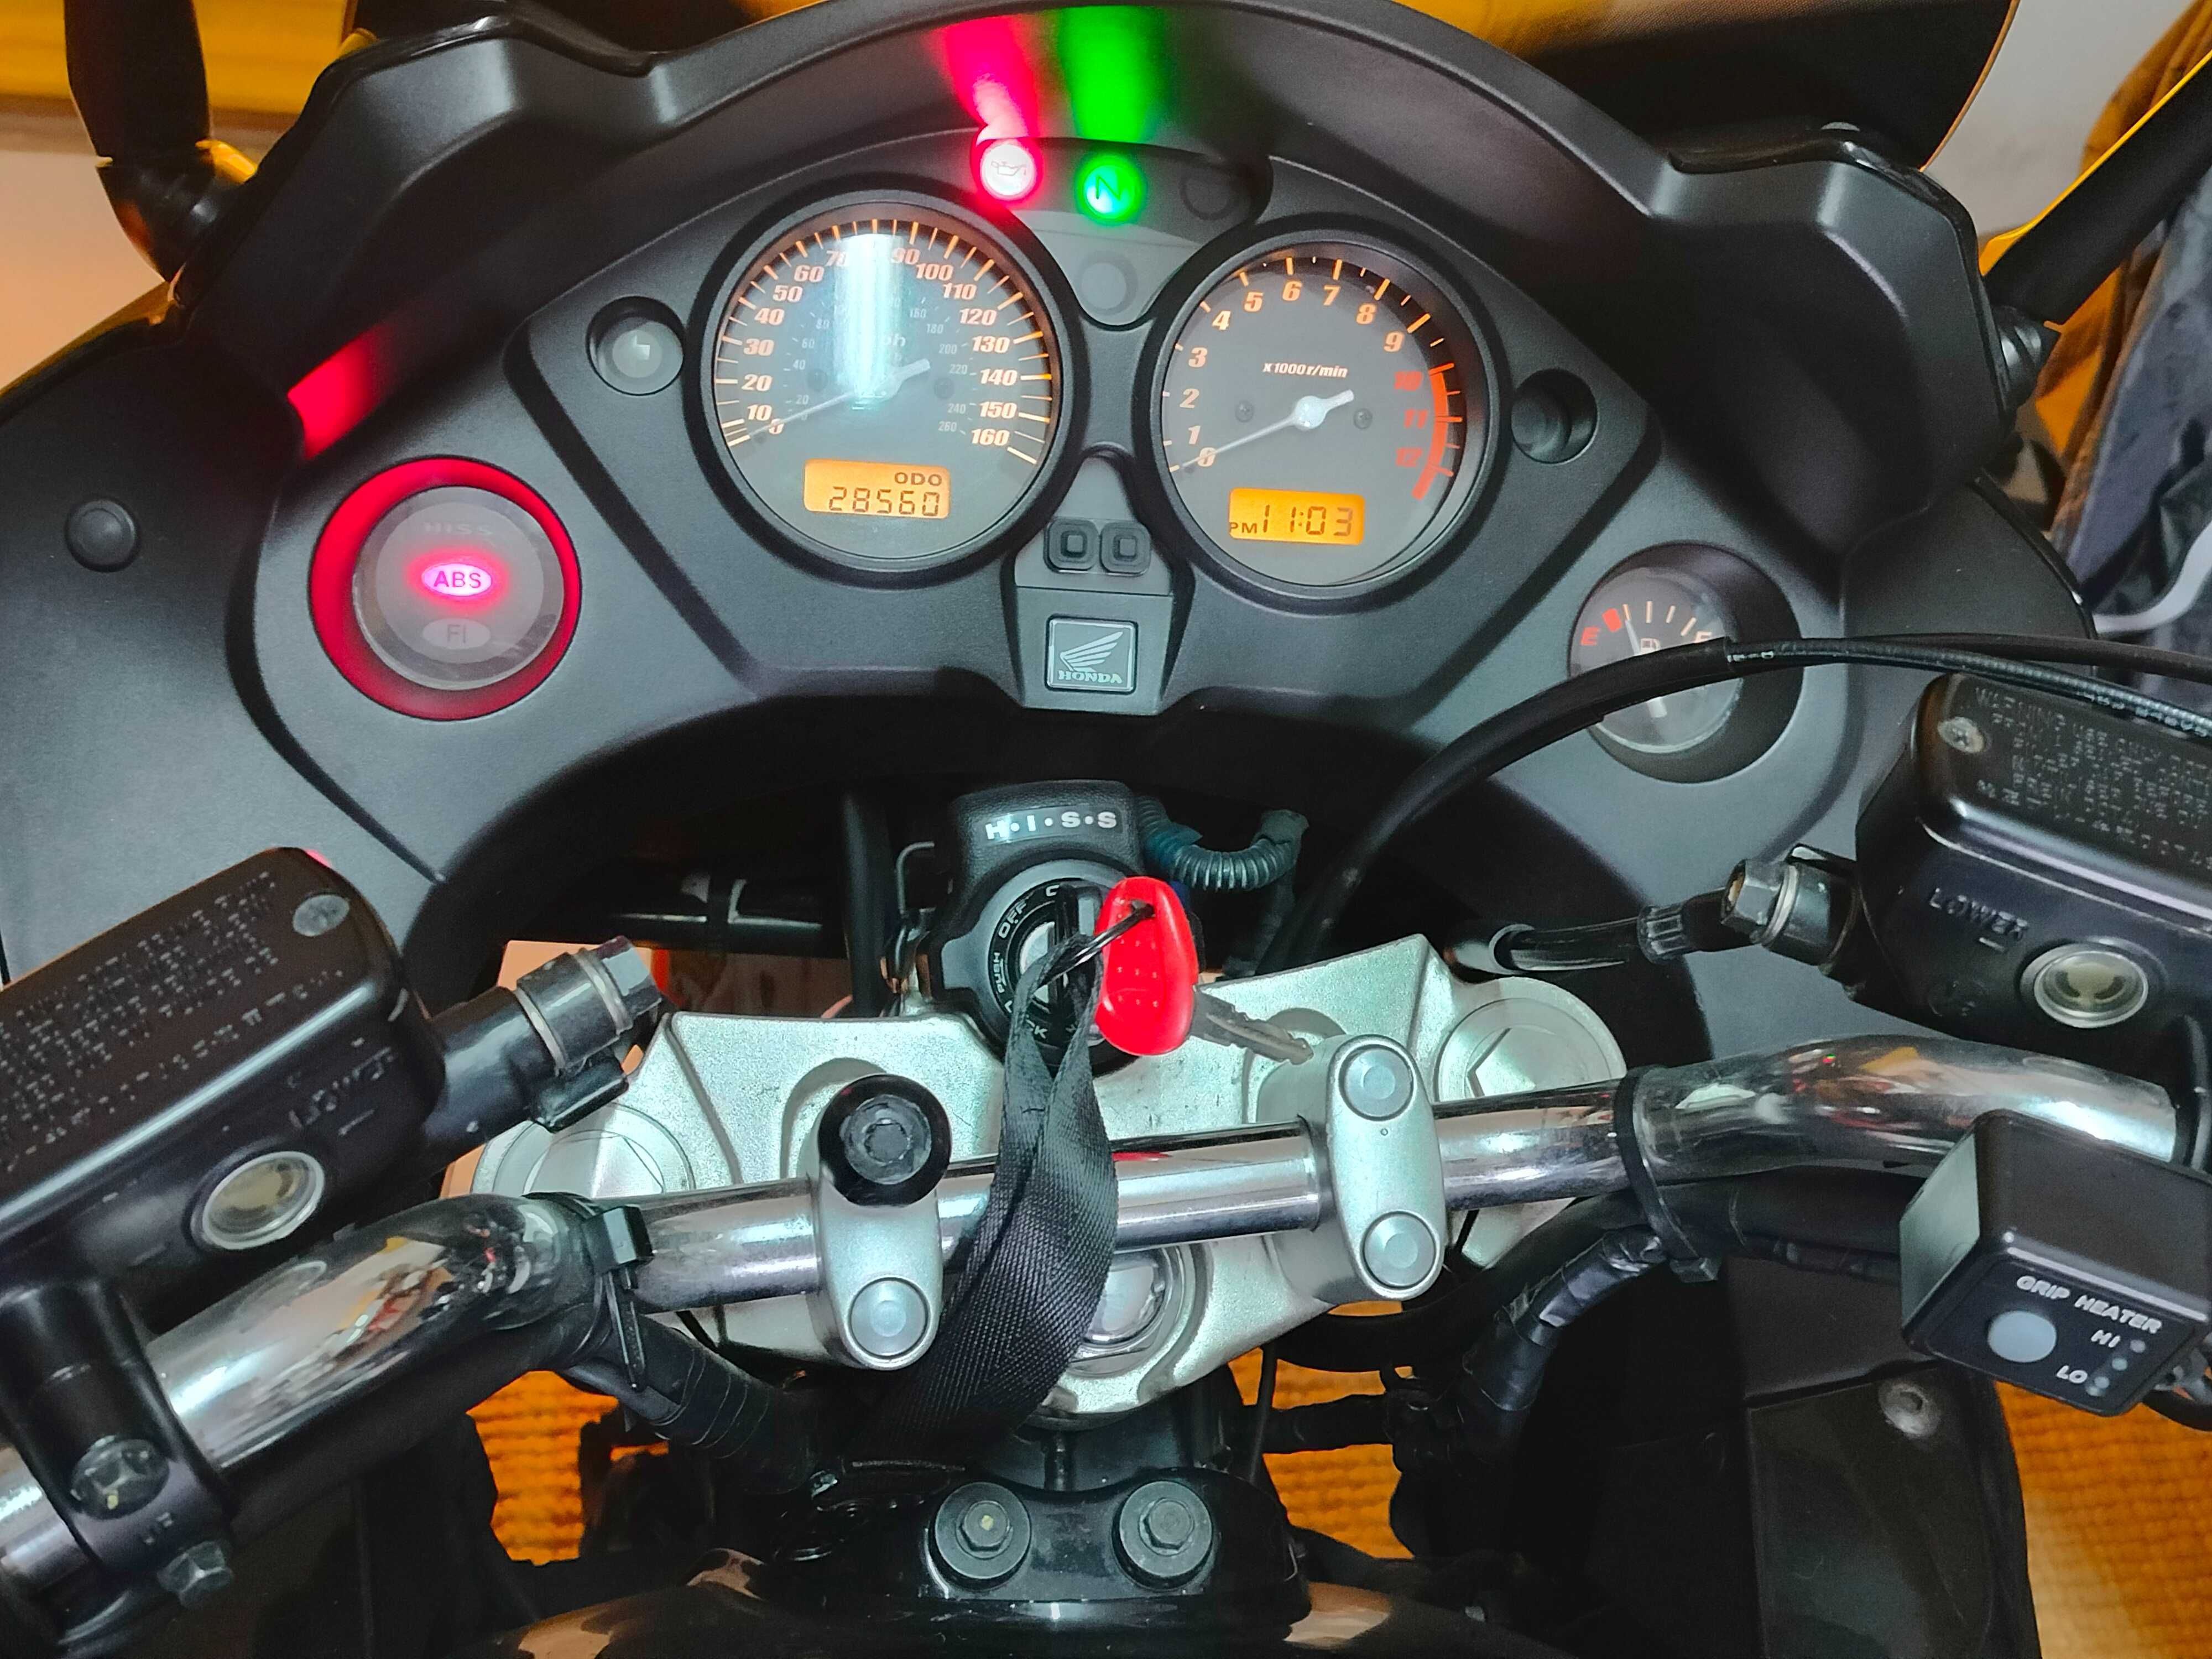 Honda CBF 1000 abs sport touring